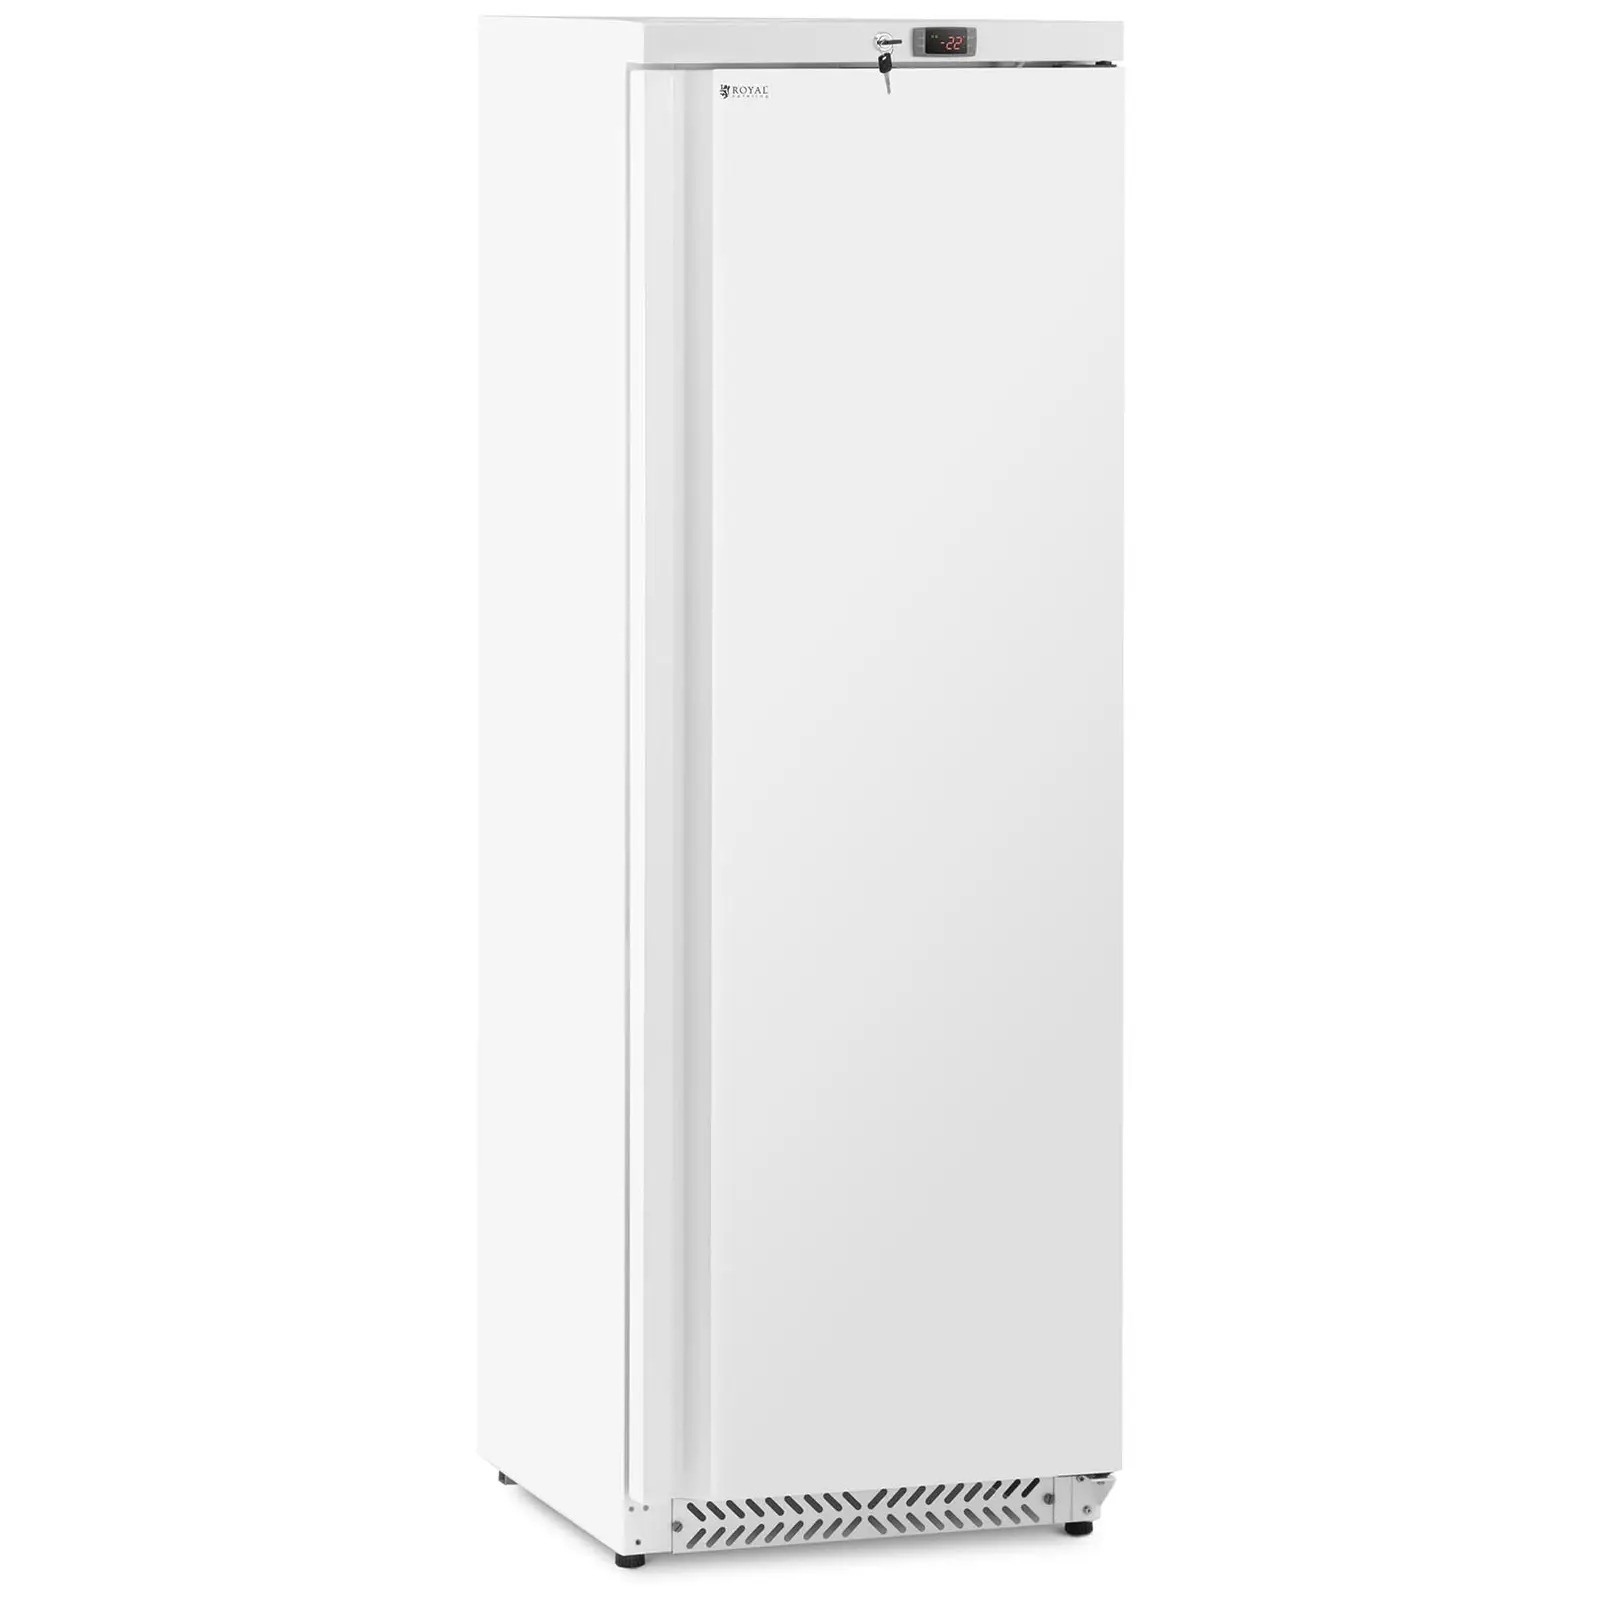 Freezer - 380 L - Royal Catering - White - refrigerant R290